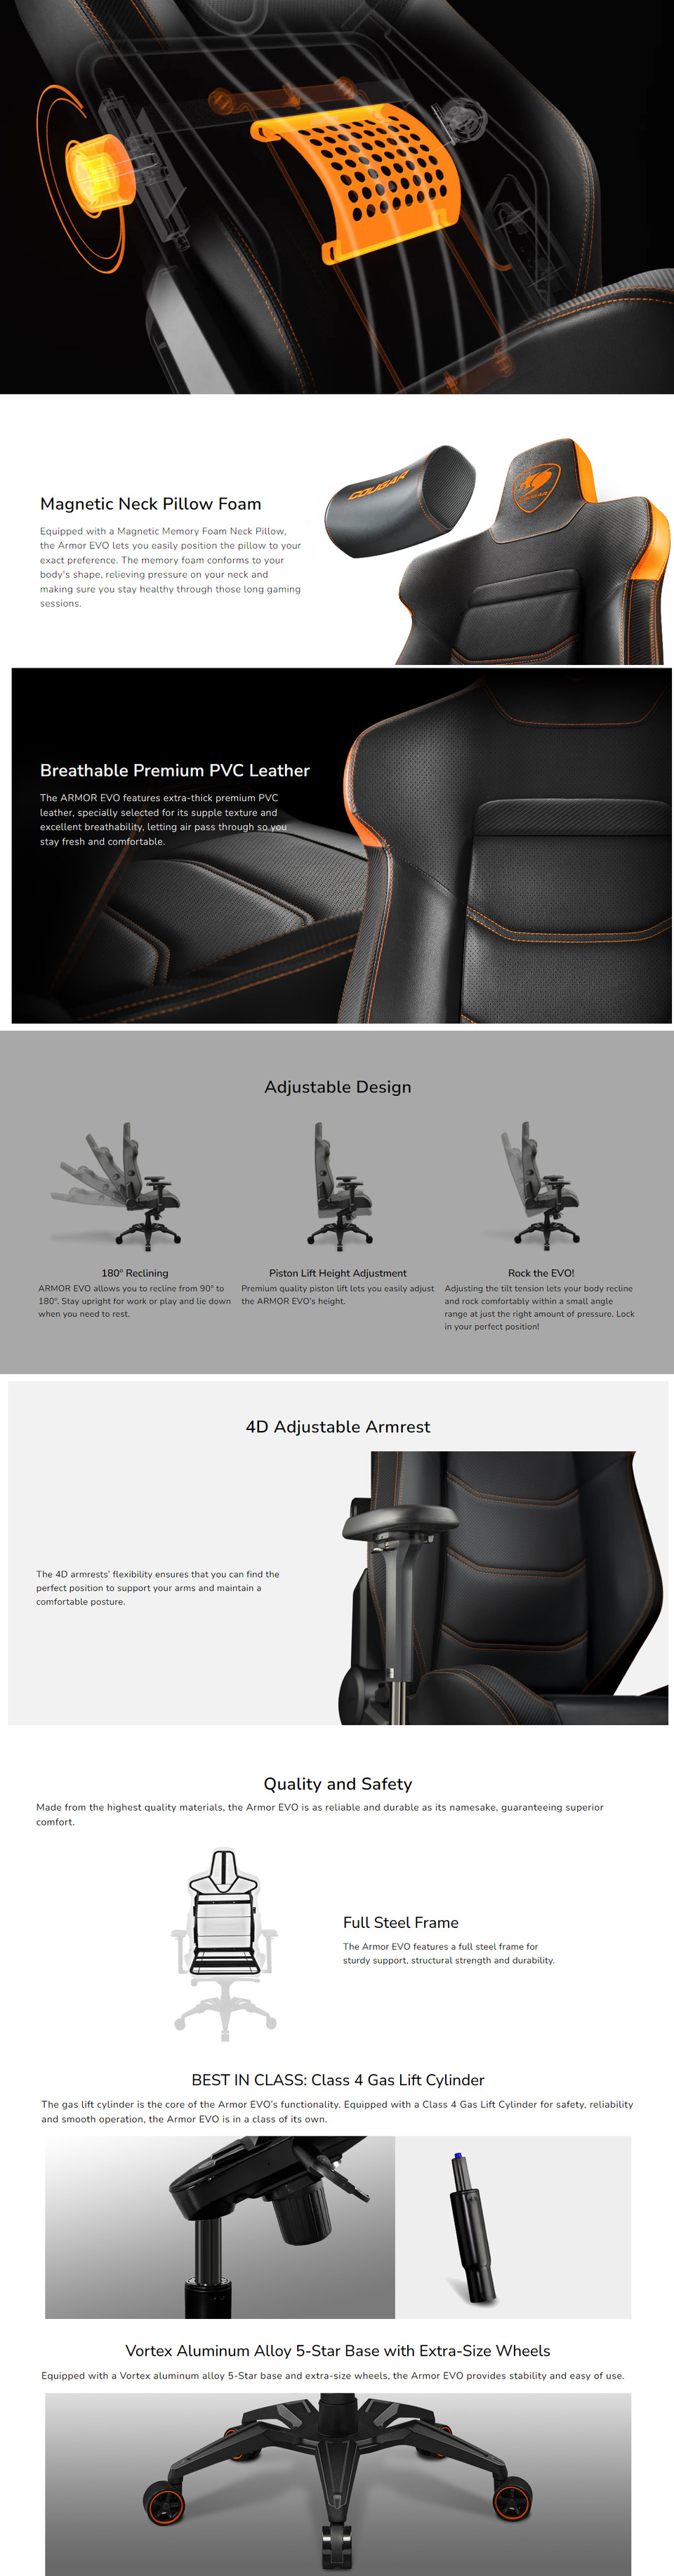 Cougar Gaming Furniture Armor Black Gaming Chair Black Version Full Steel  Frame